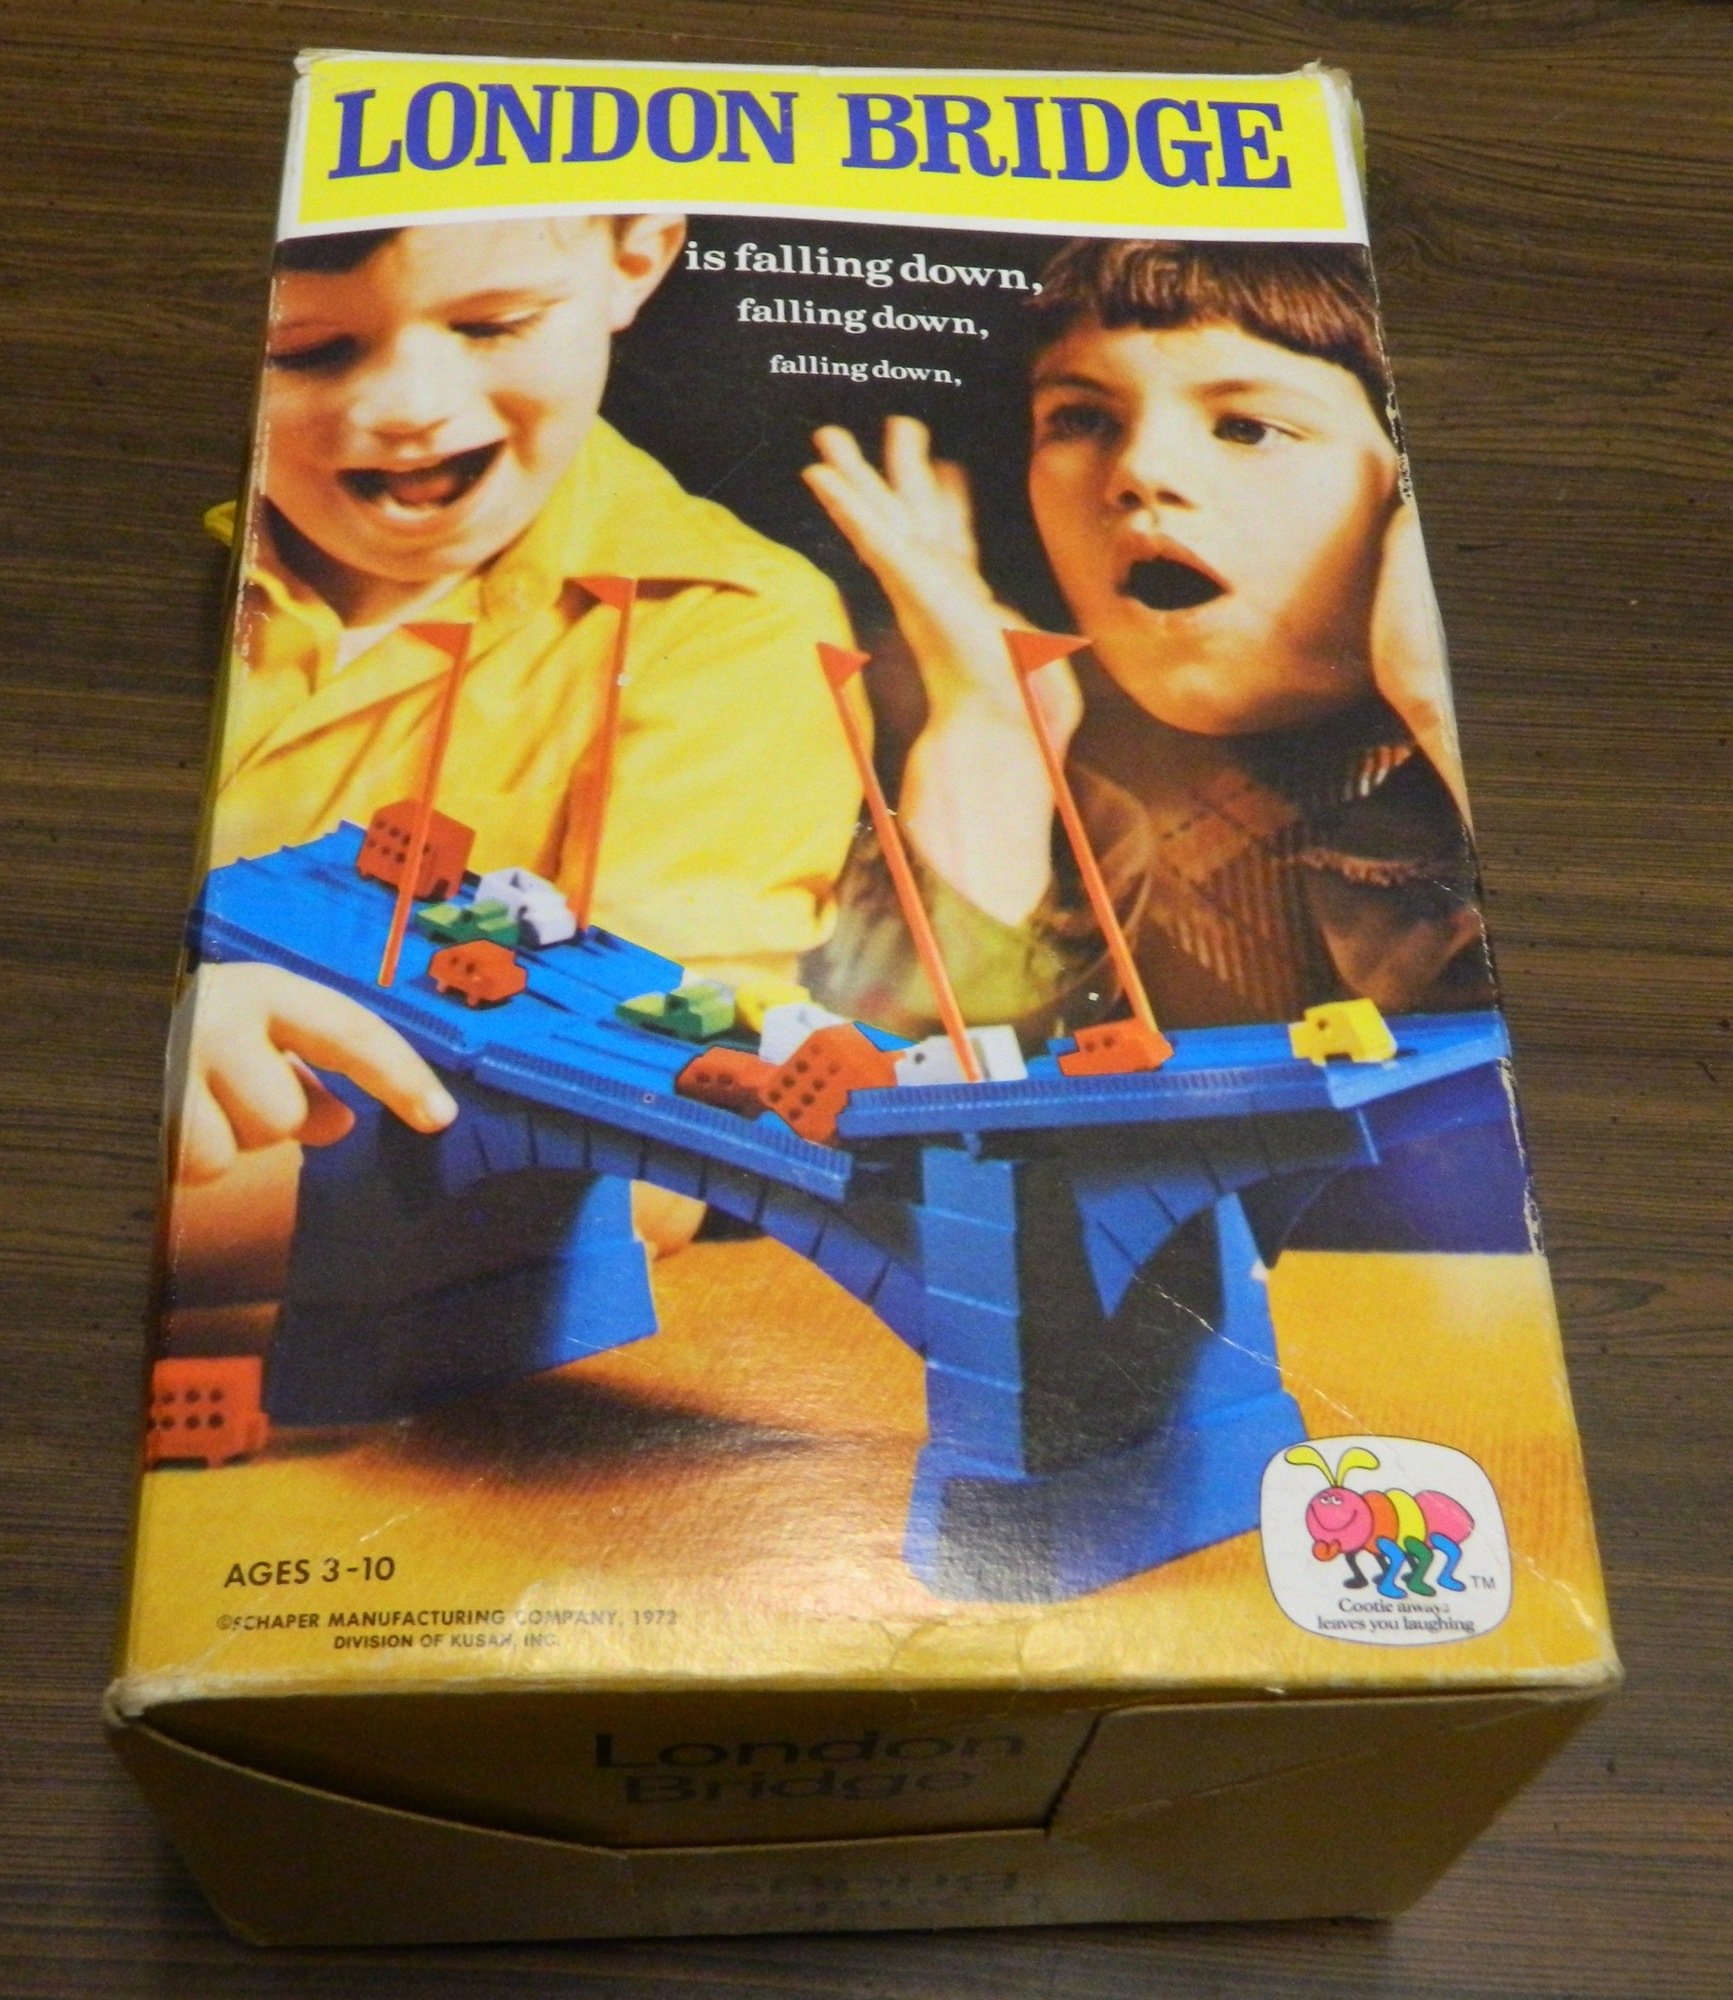 Box for the London Bridge Game